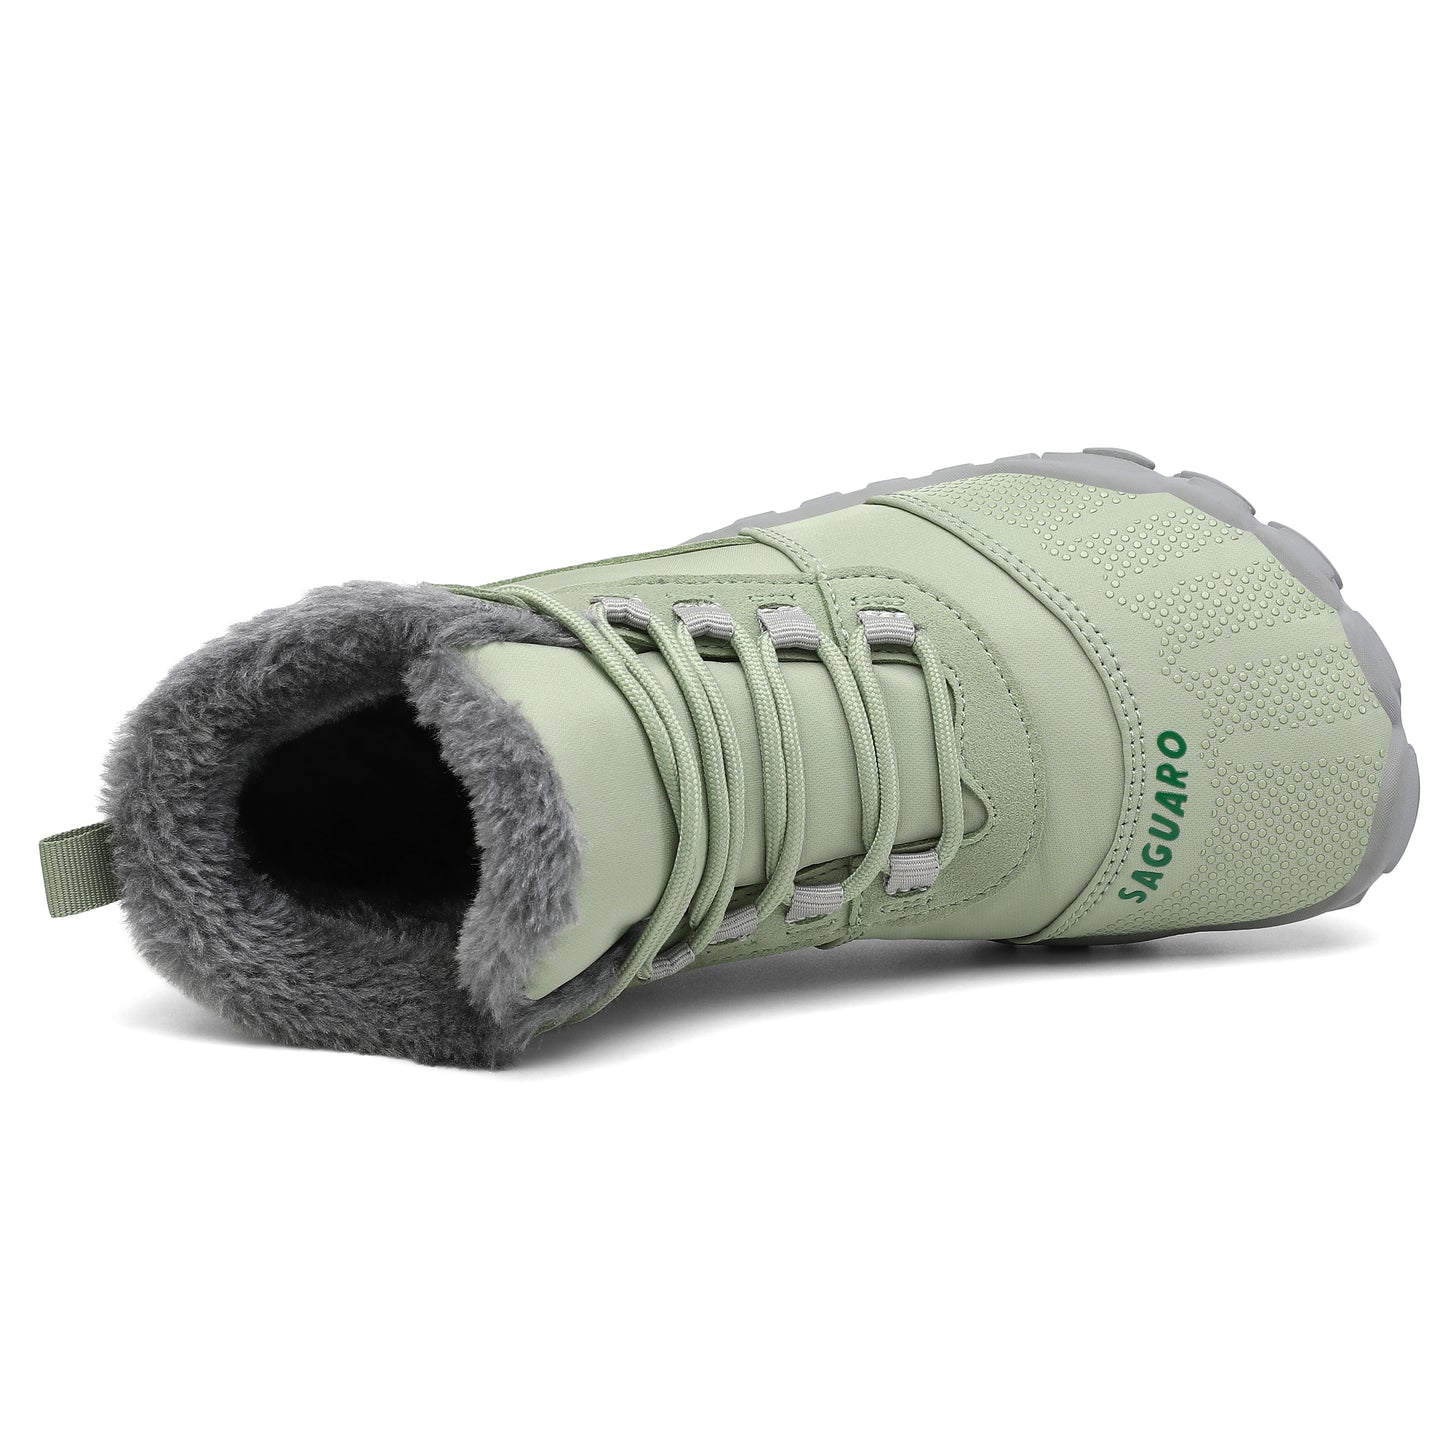 Botas Will I - Verde Claro - Barefootshoes